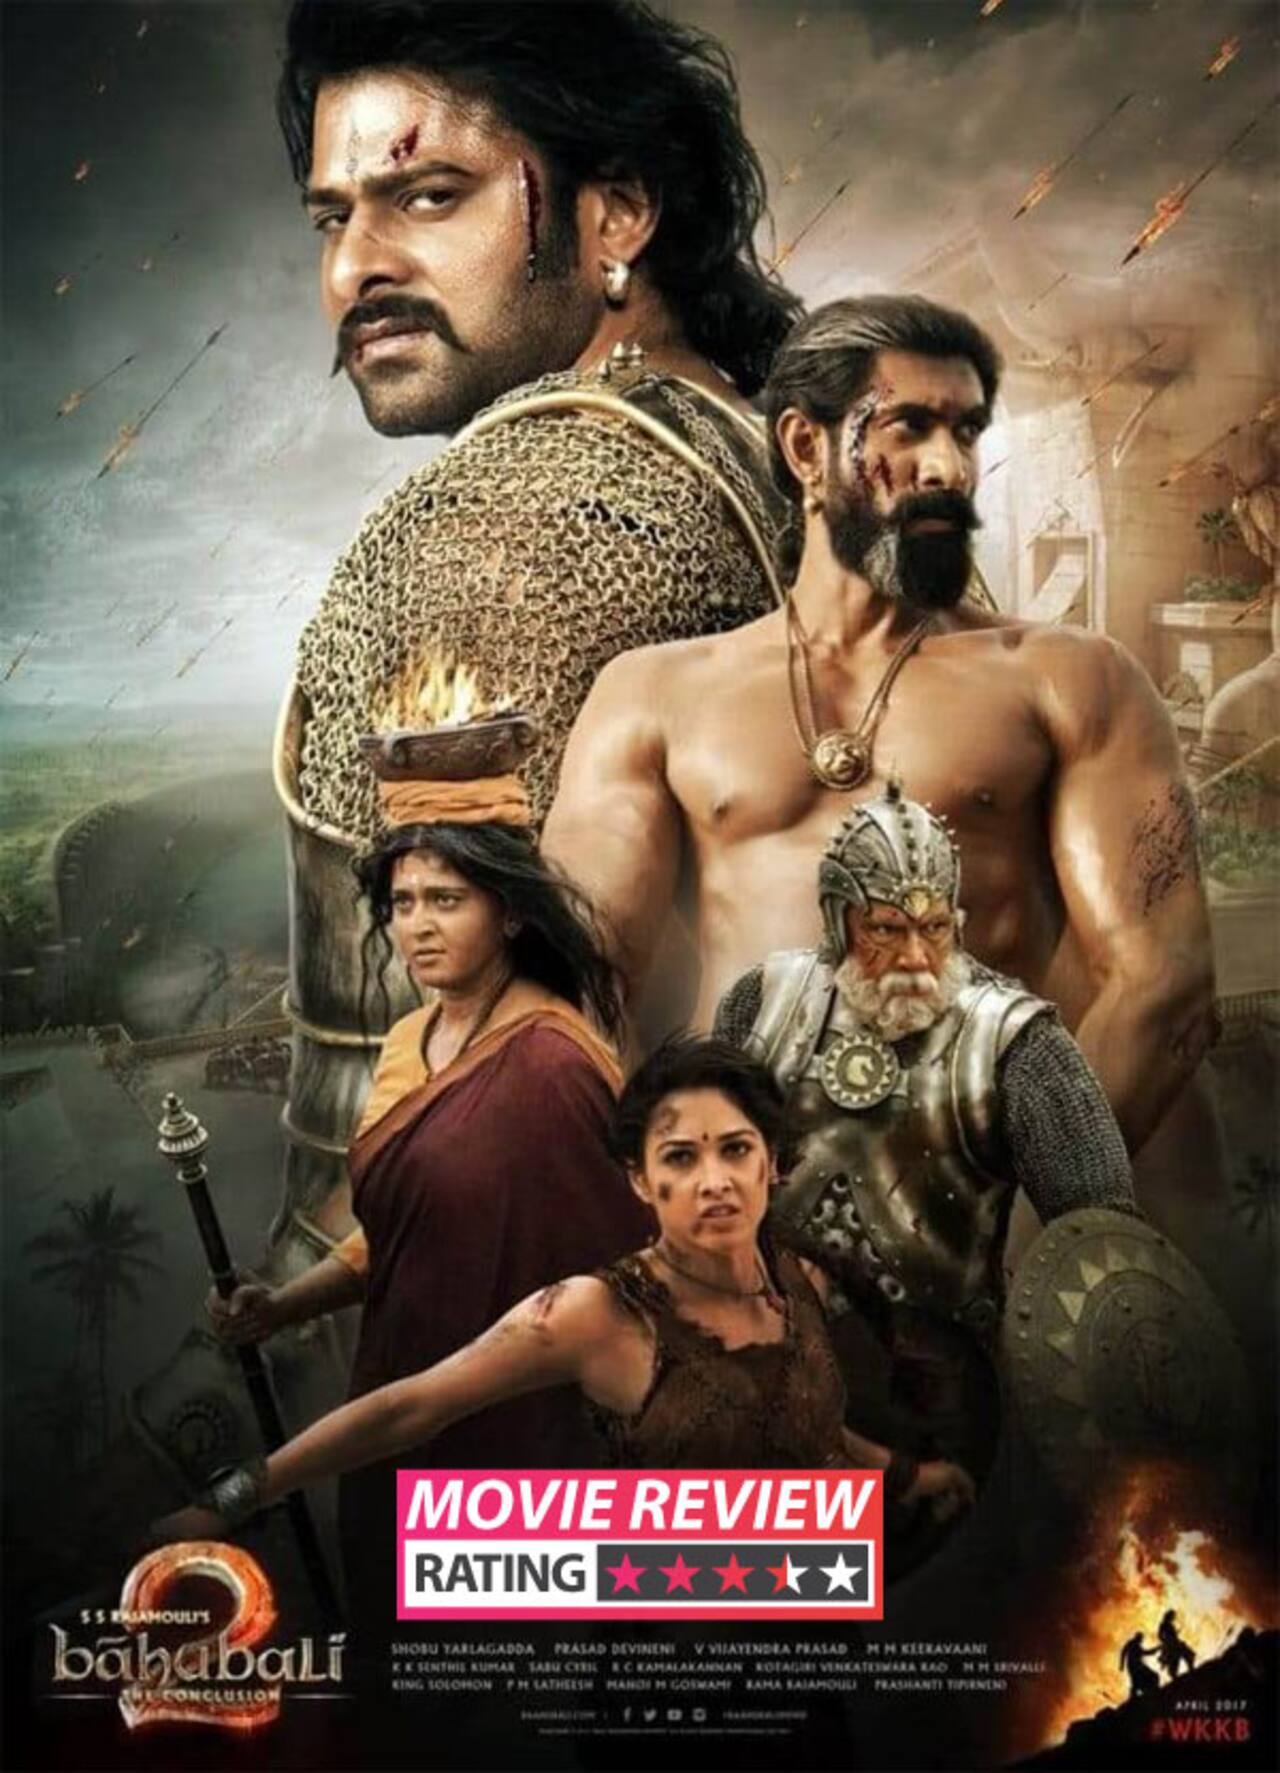 bahubali 2 movie review imdb